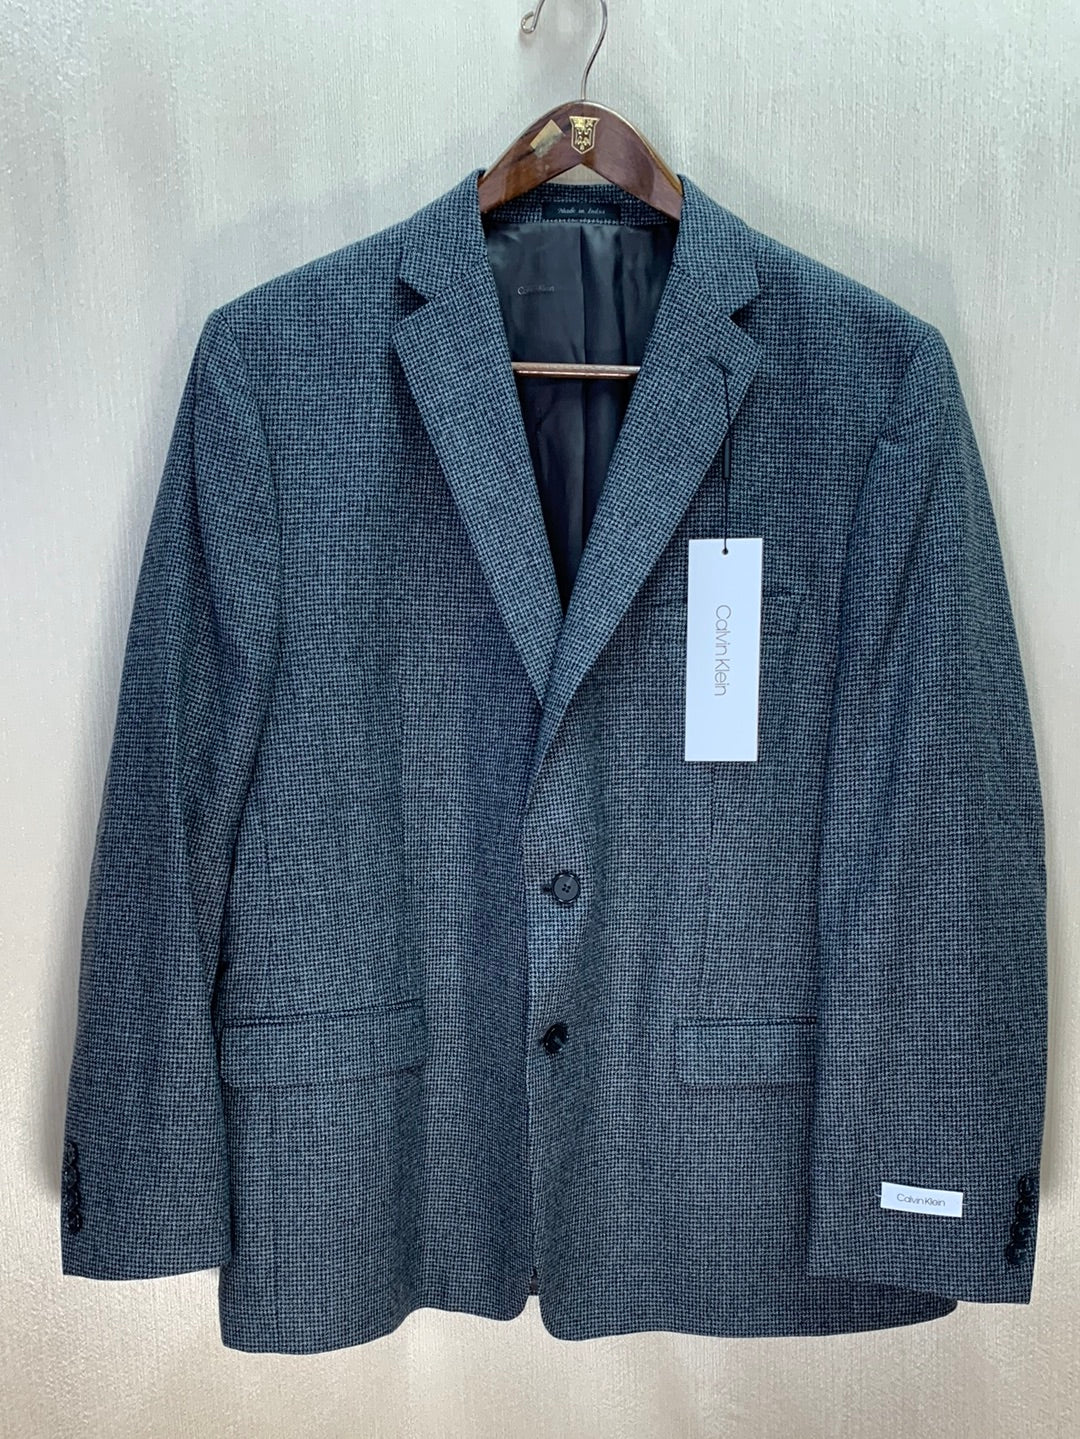 NWT - CALVIN KLEIN black white check Wool Blazer Suit Jacket - 46R